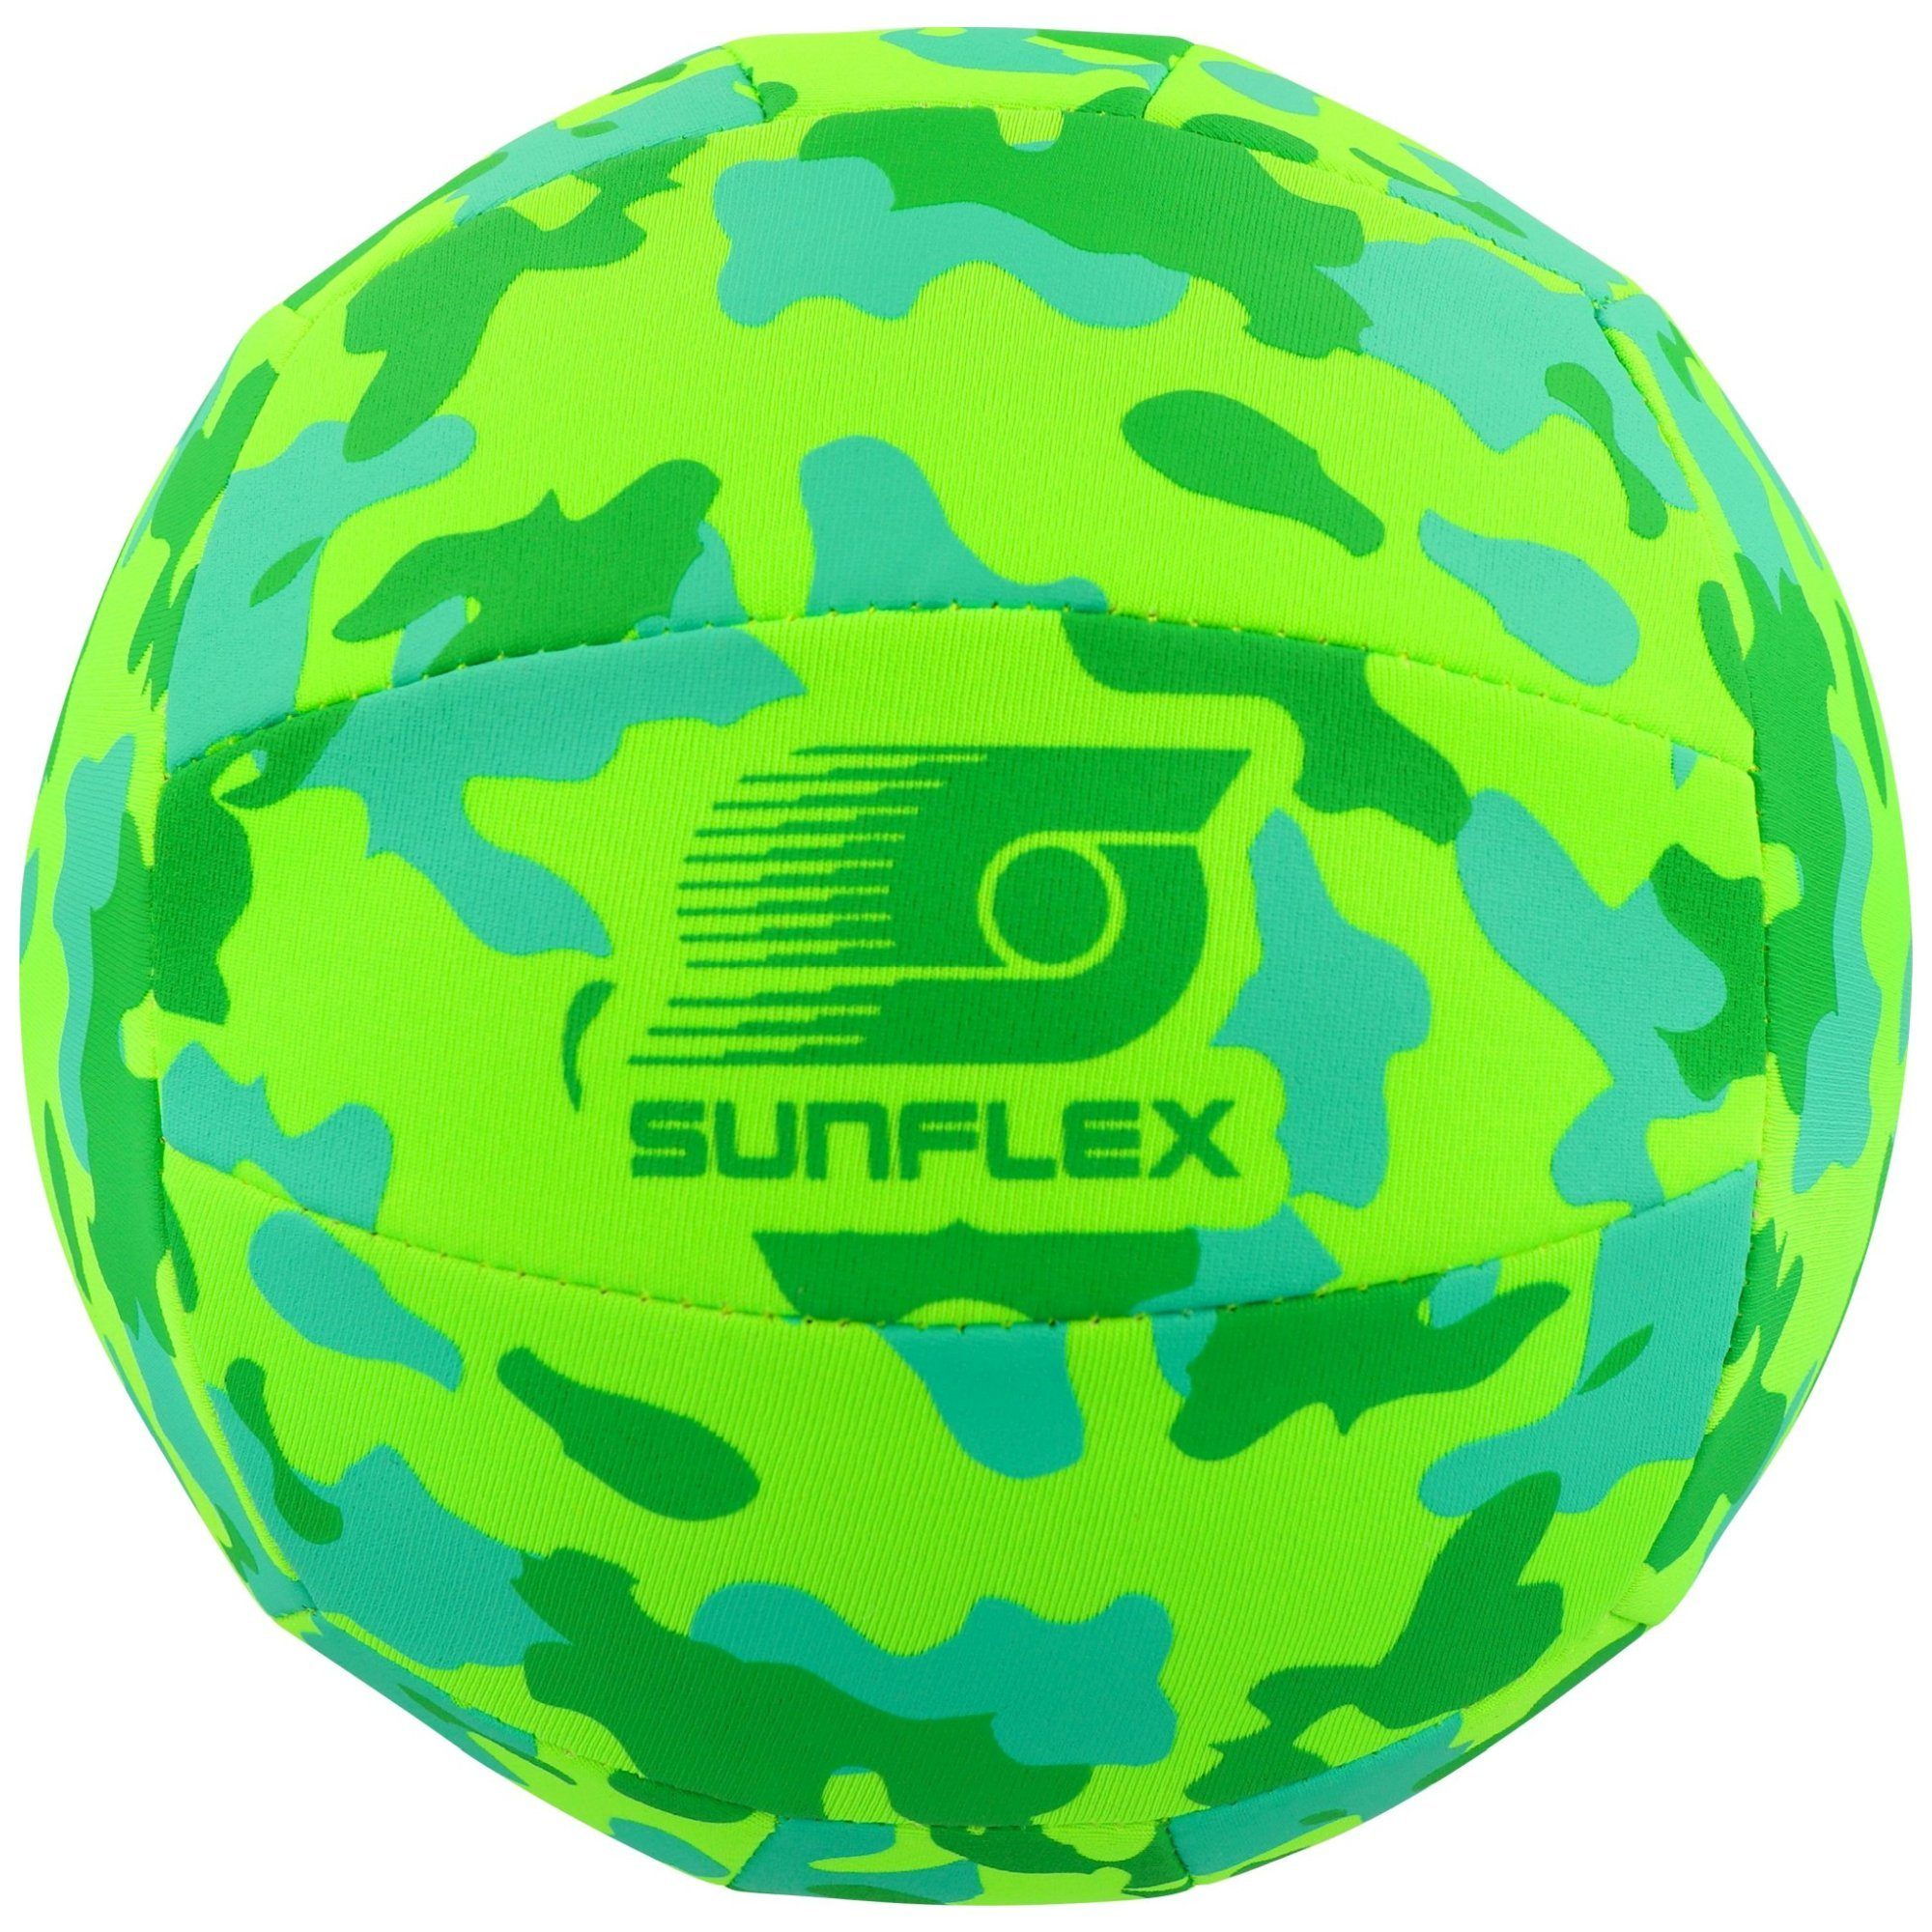 Sunflex Beachsoccerball sunflex Beach- und Funball Size 5 Camo grün